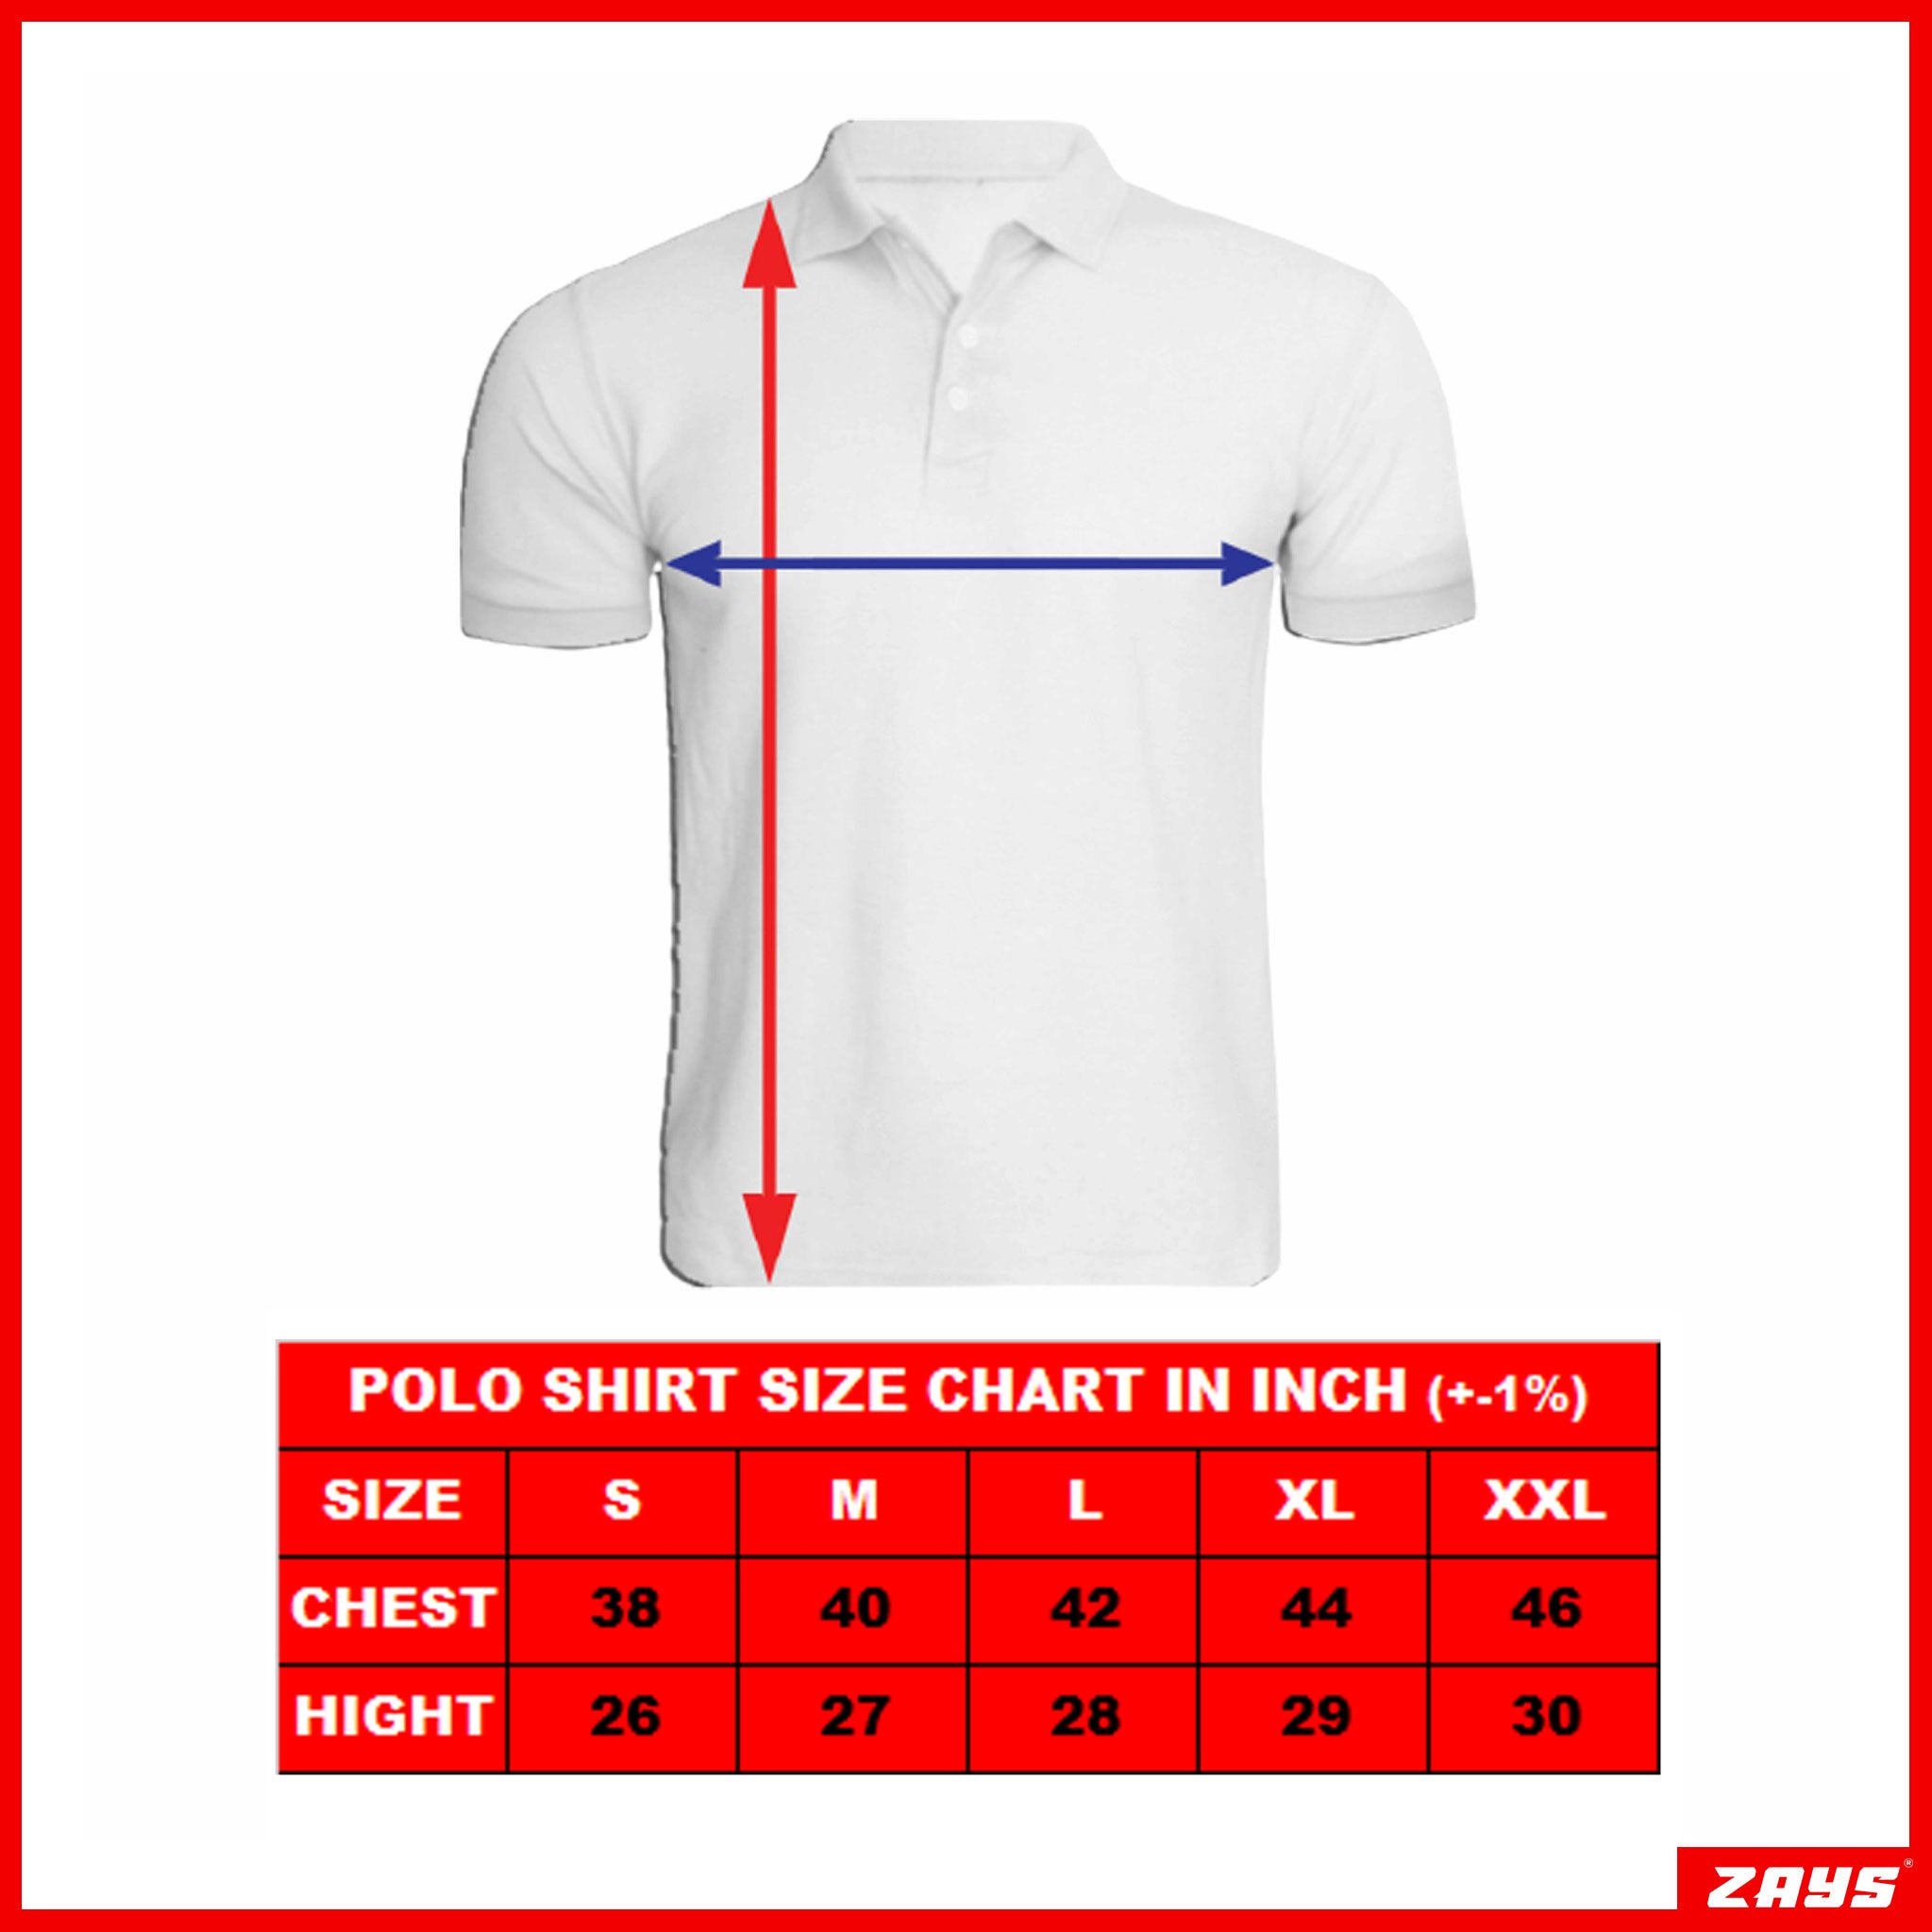 Imported Super Premium Cotton Polo Shirt For Men (ZAX03) - White